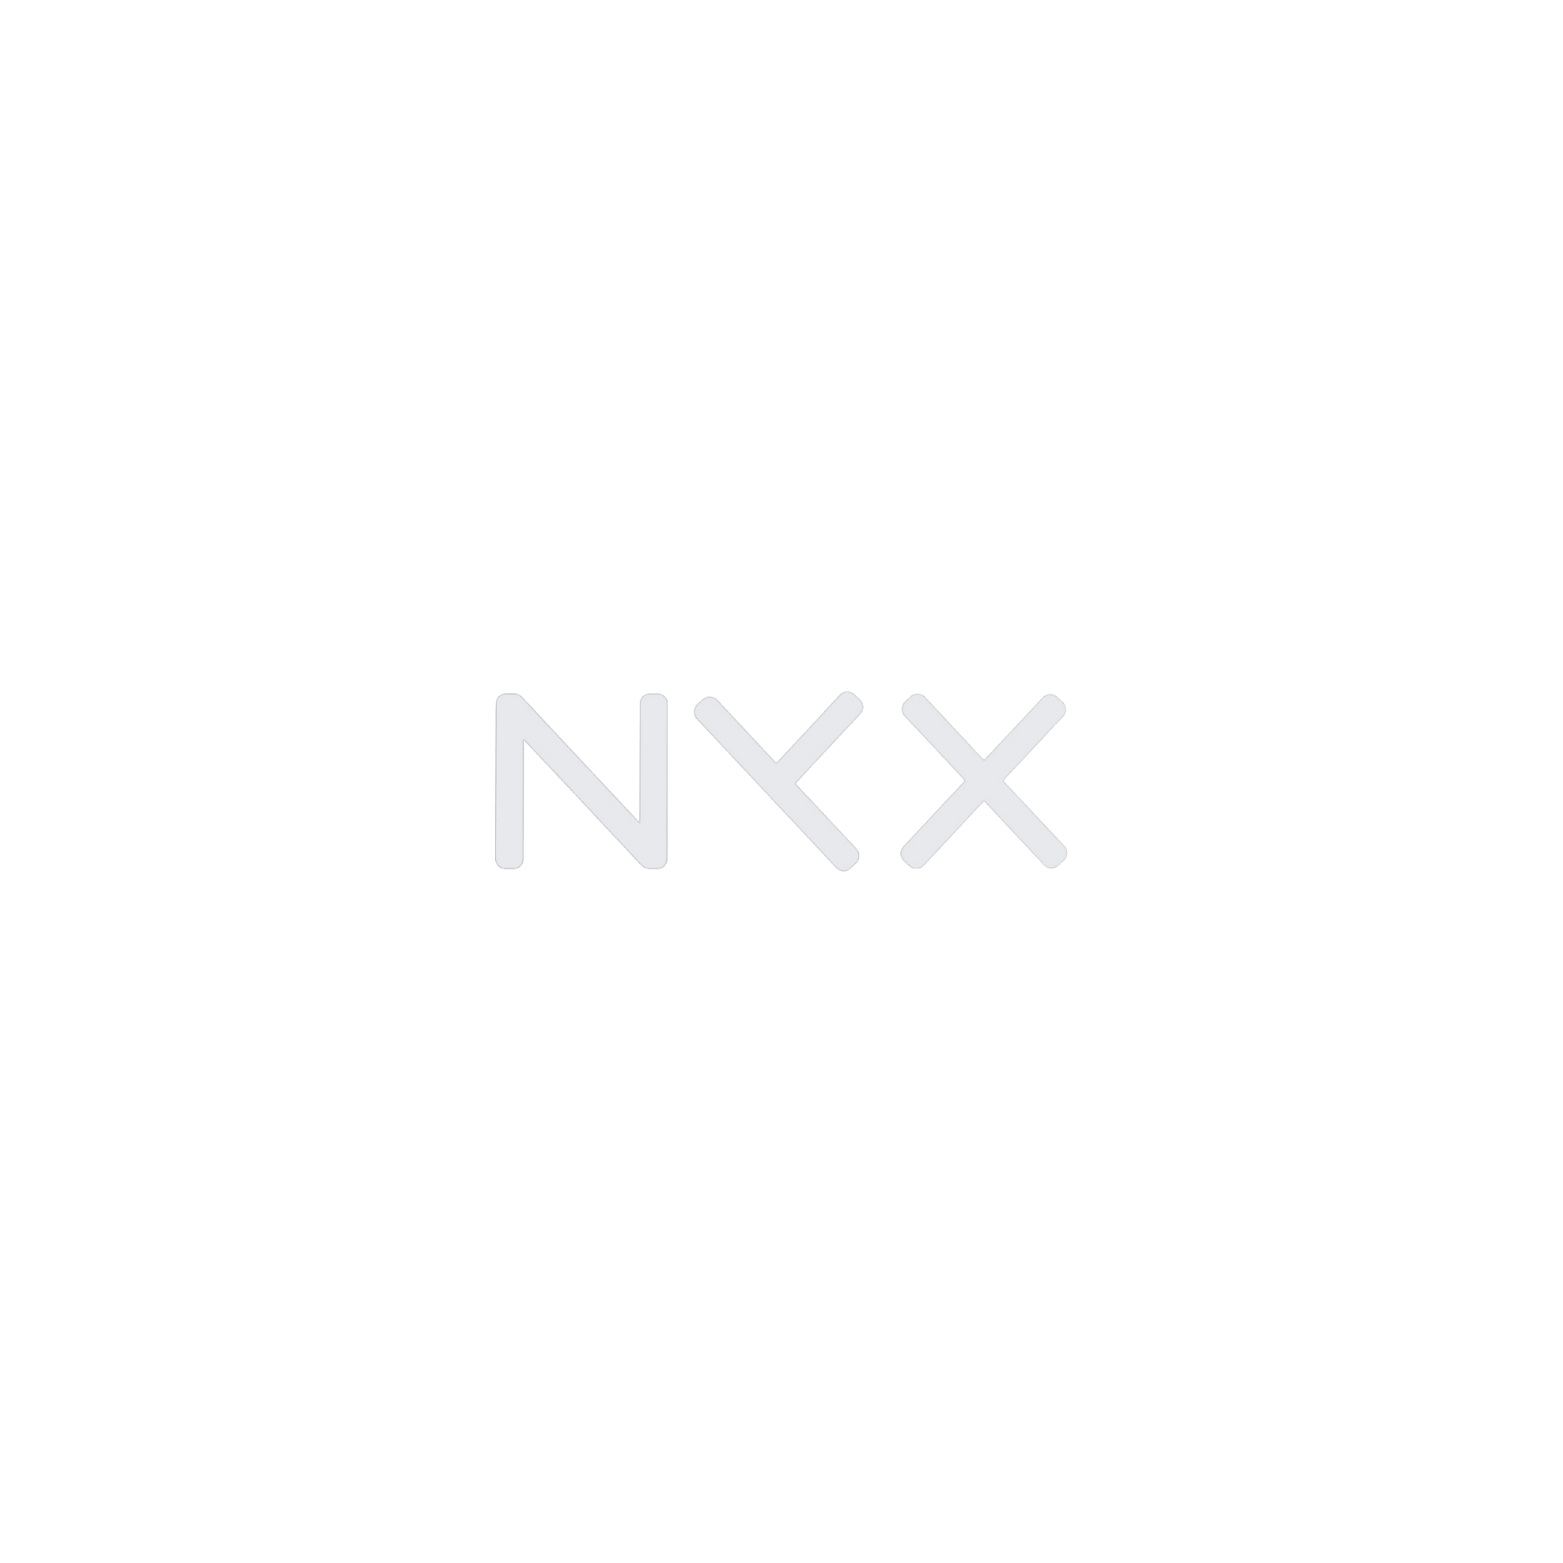 NYX - NETWORK